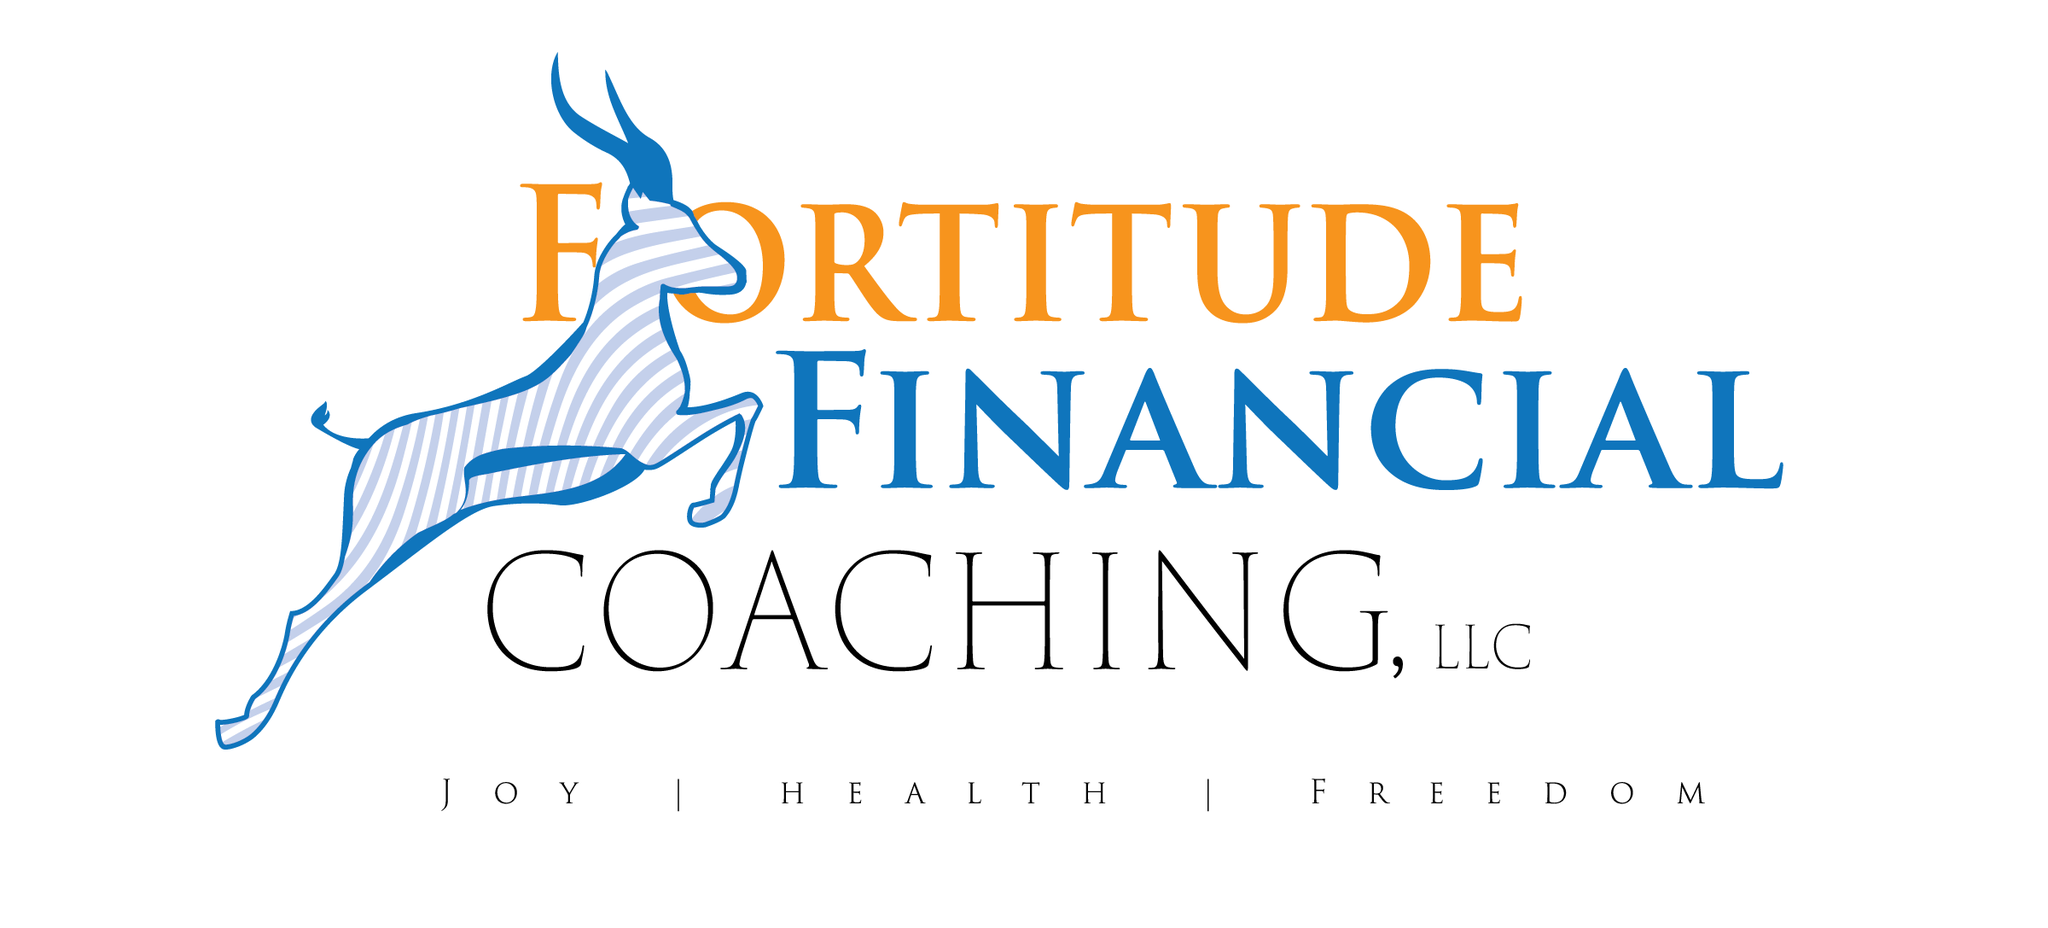 Gary Smith at Fortitude Financial Coaching, LLC